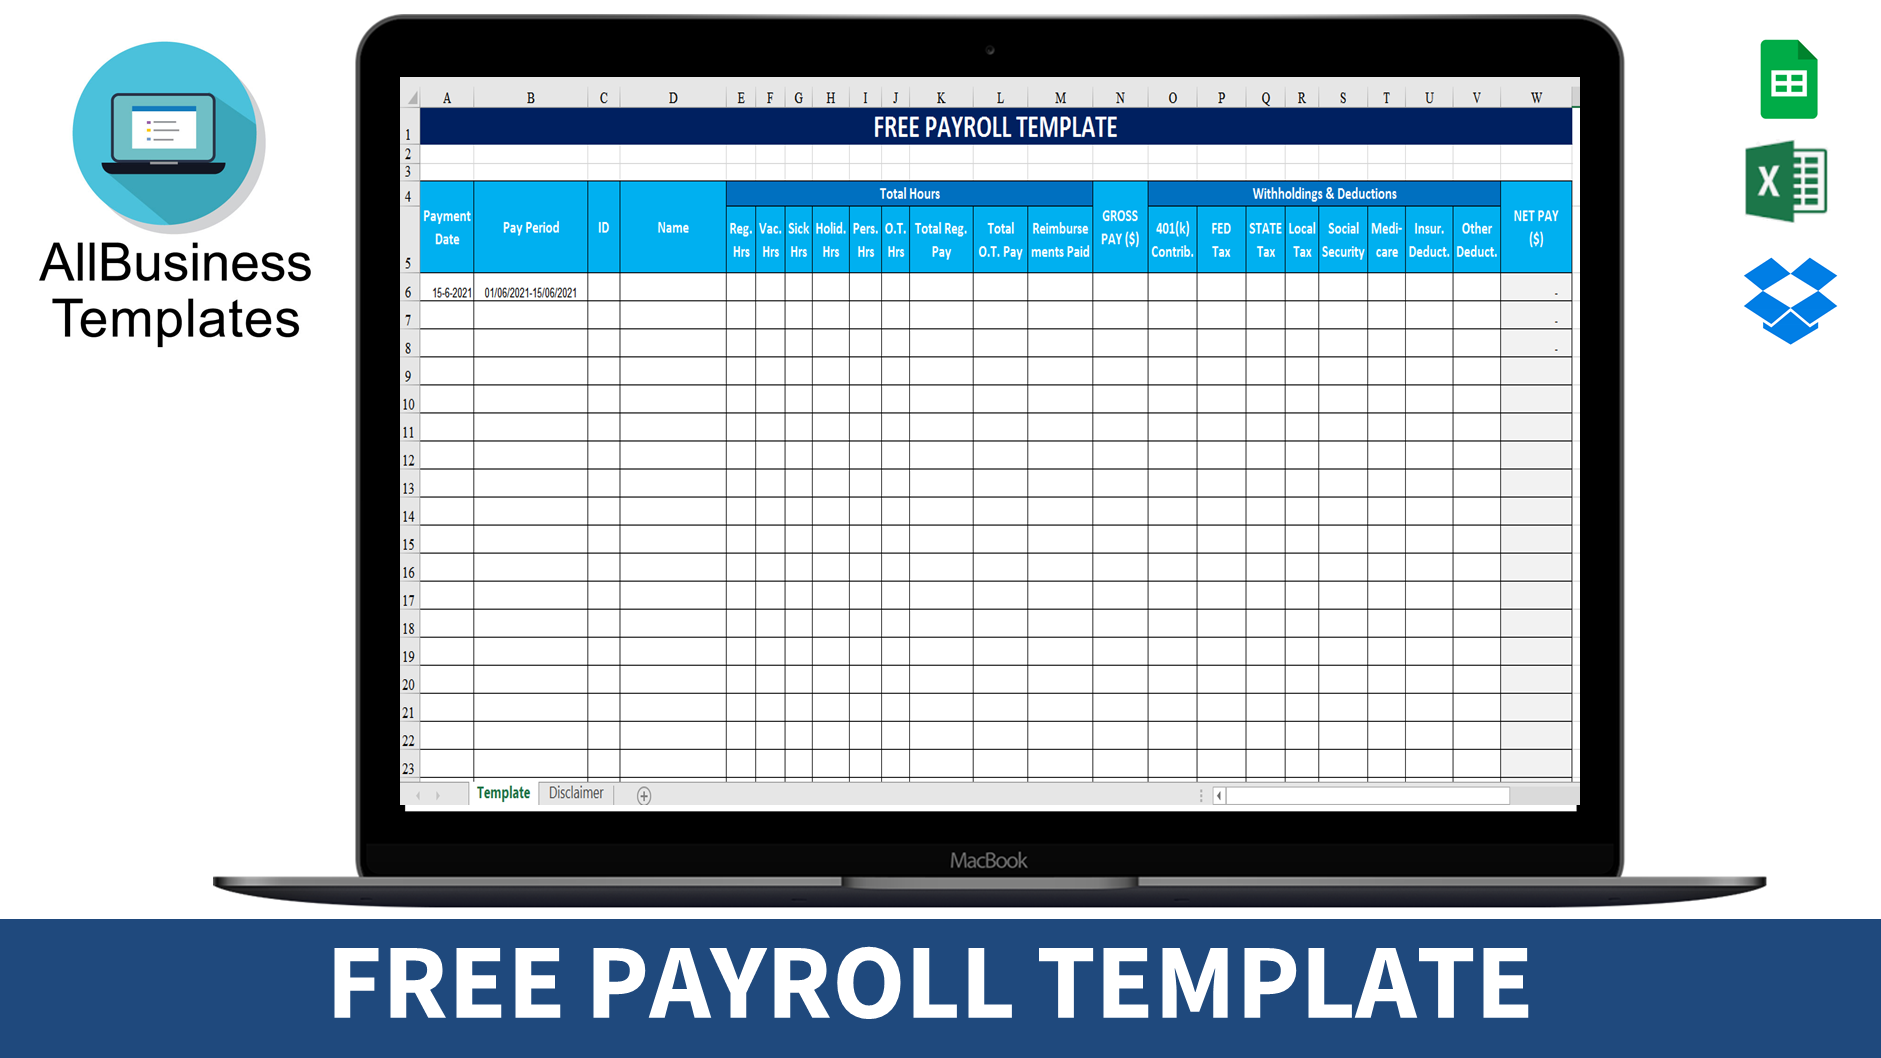 Free Payroll Template main image